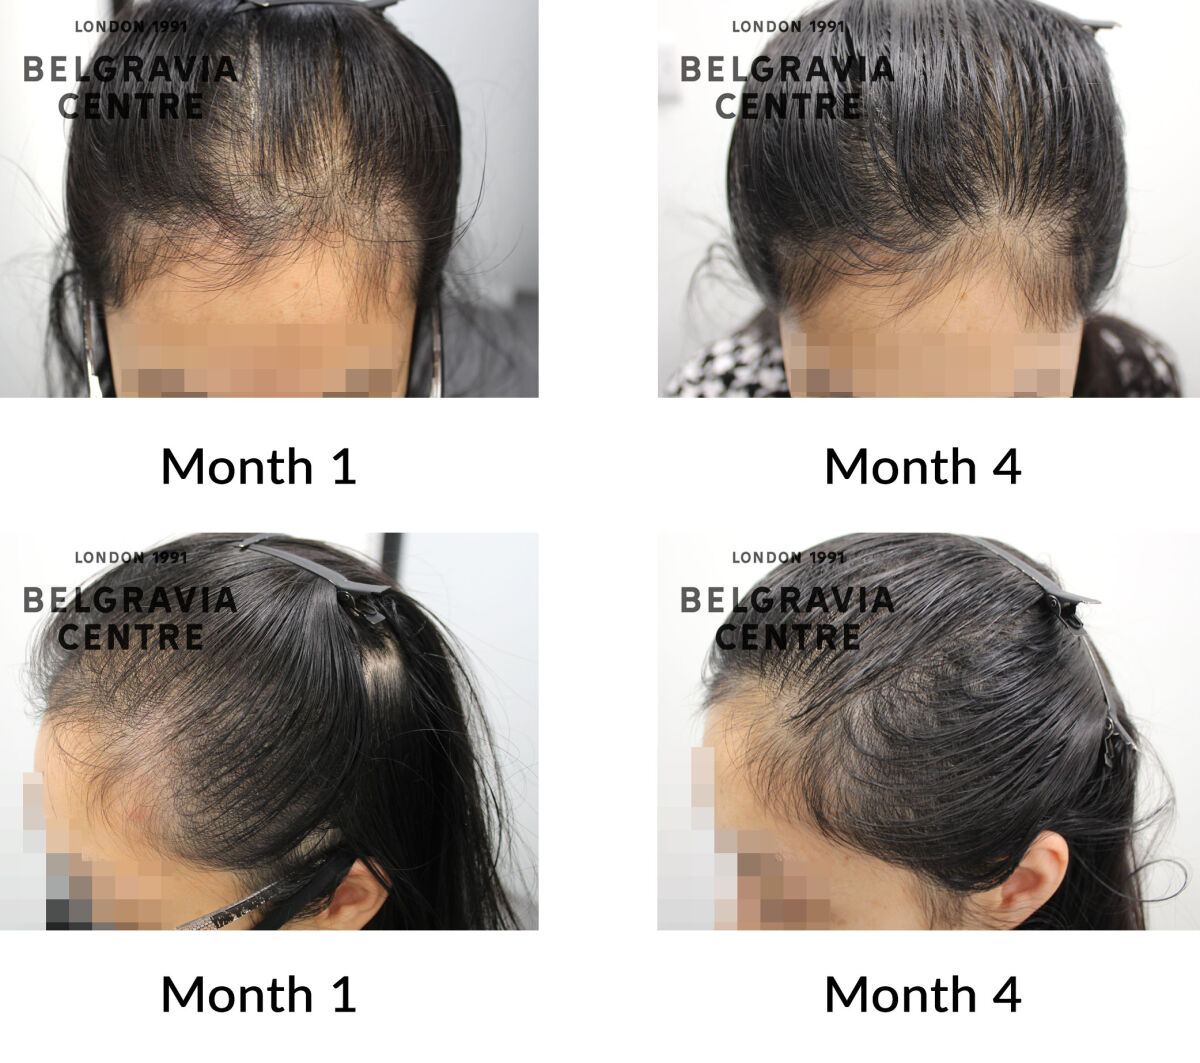 female pattern hair loss the belgravia centre 432983